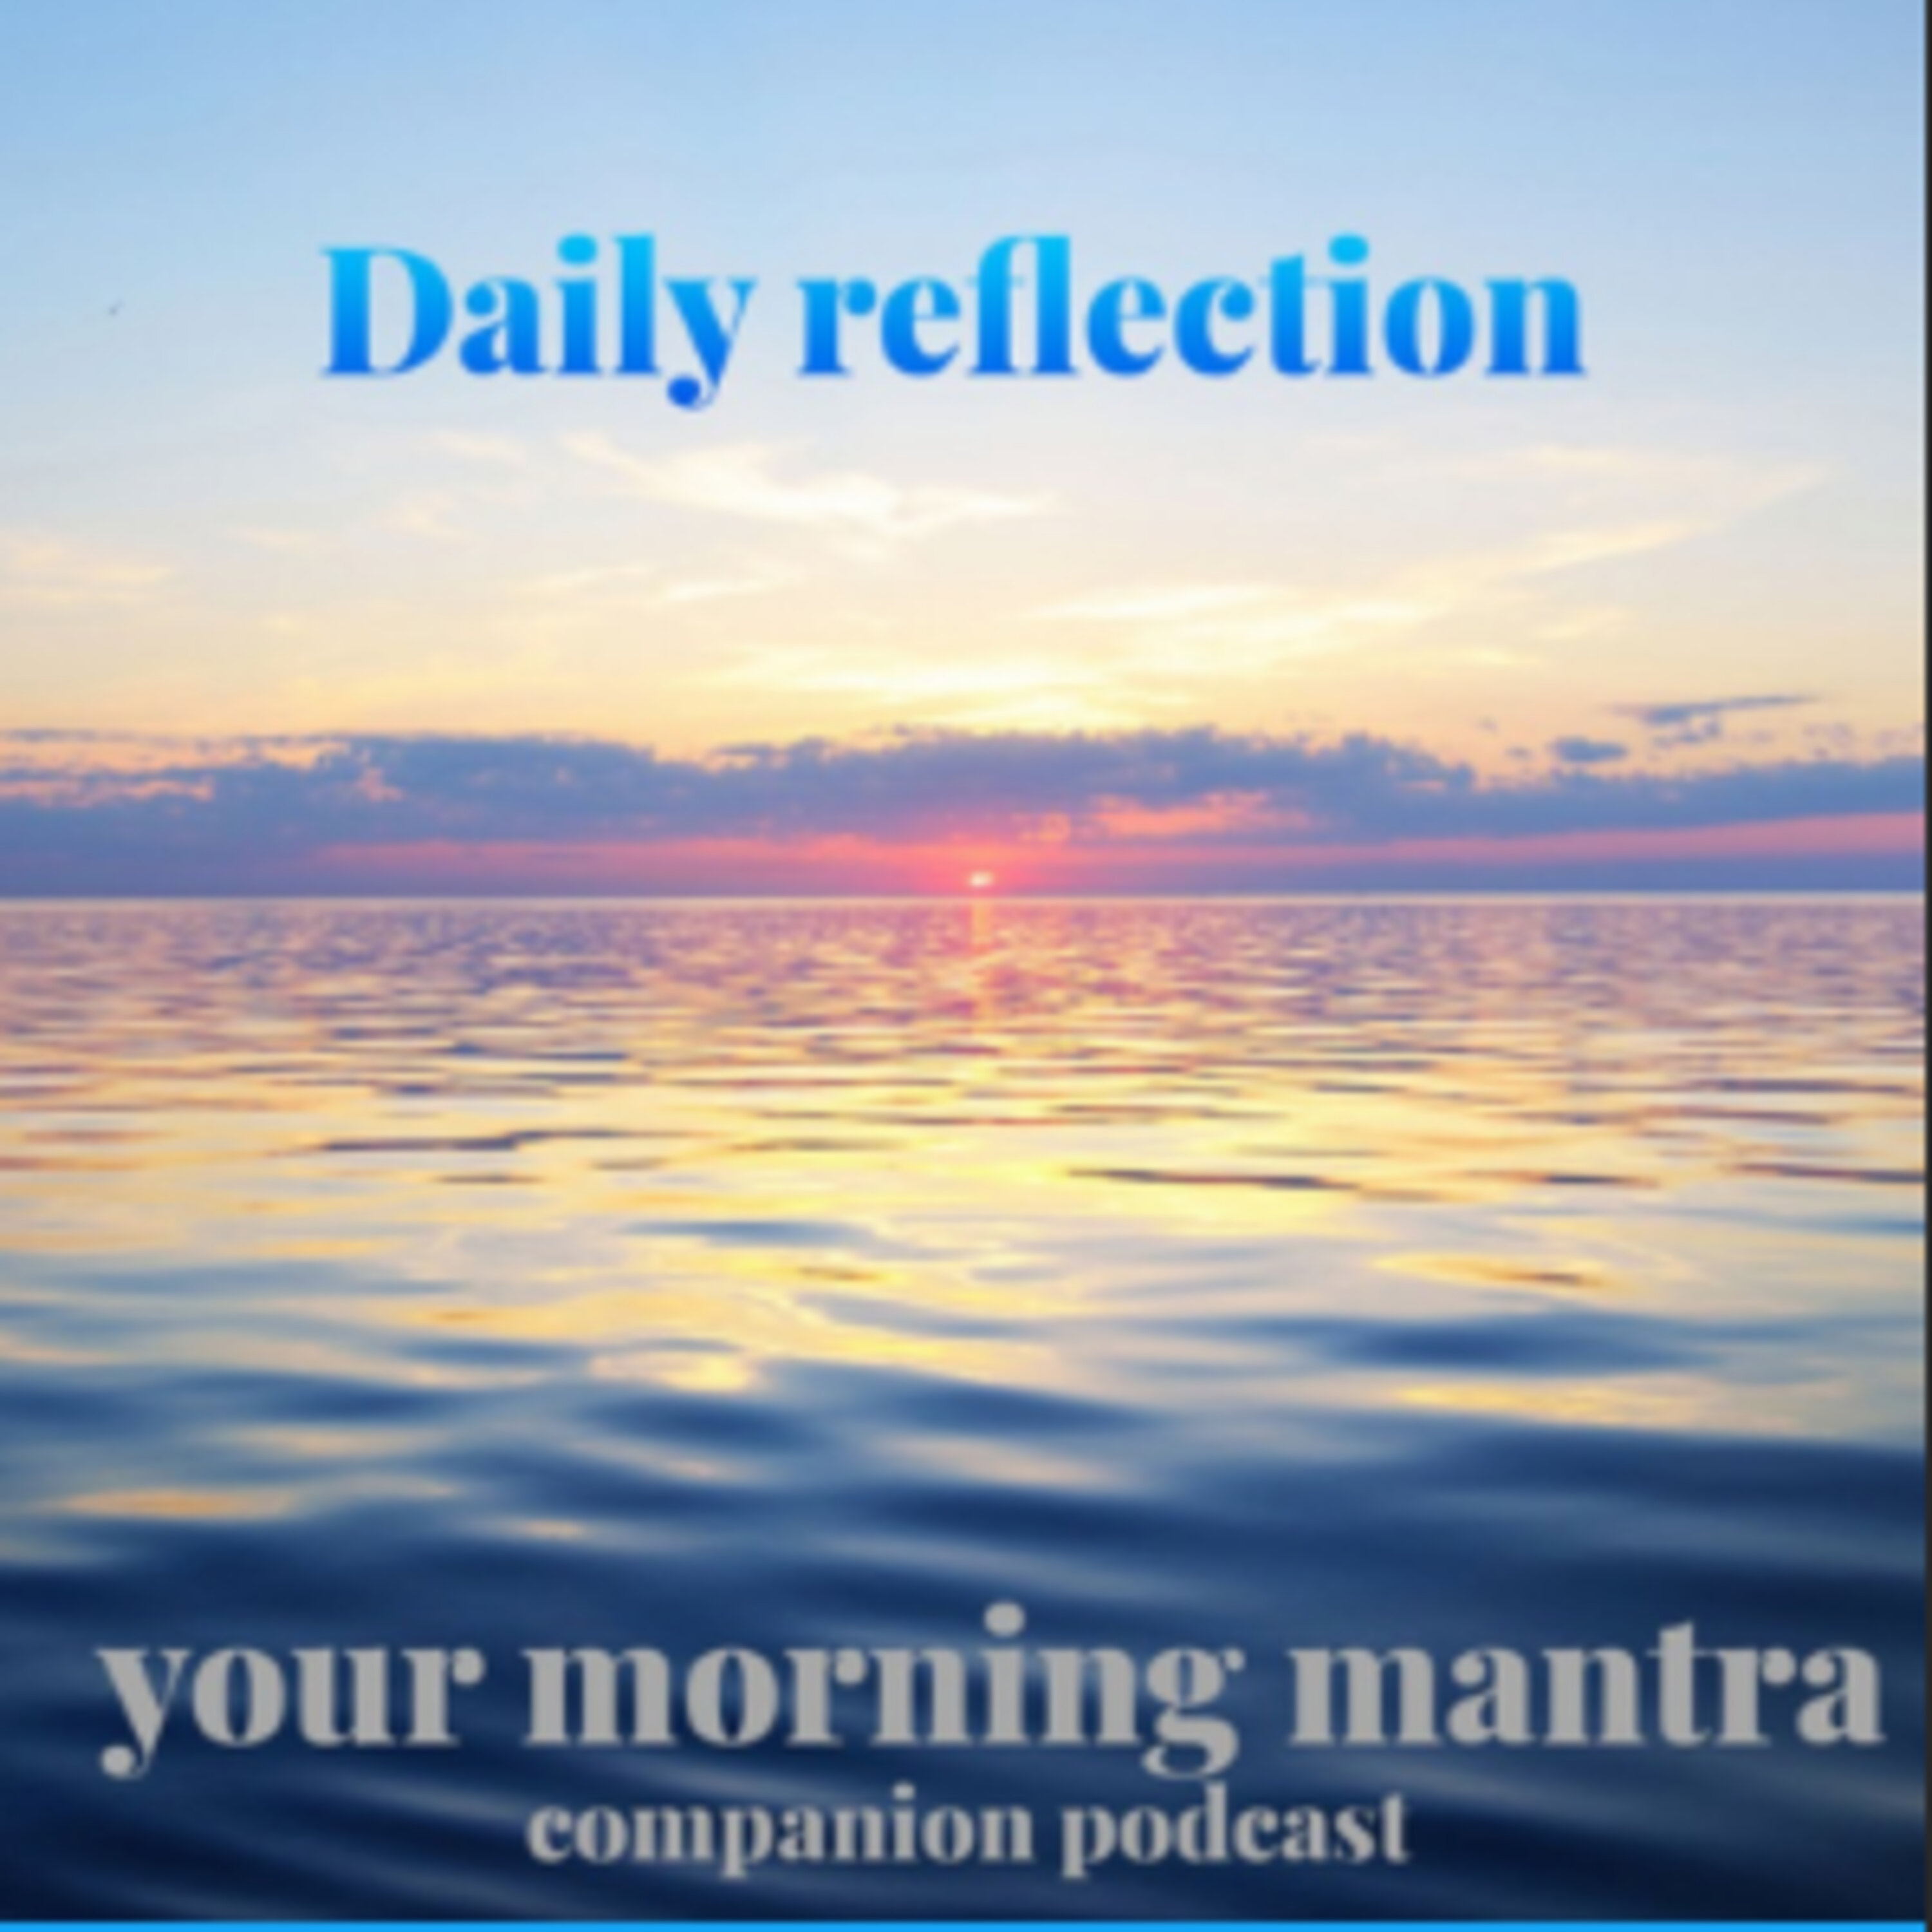 Reflection - I apply right effort